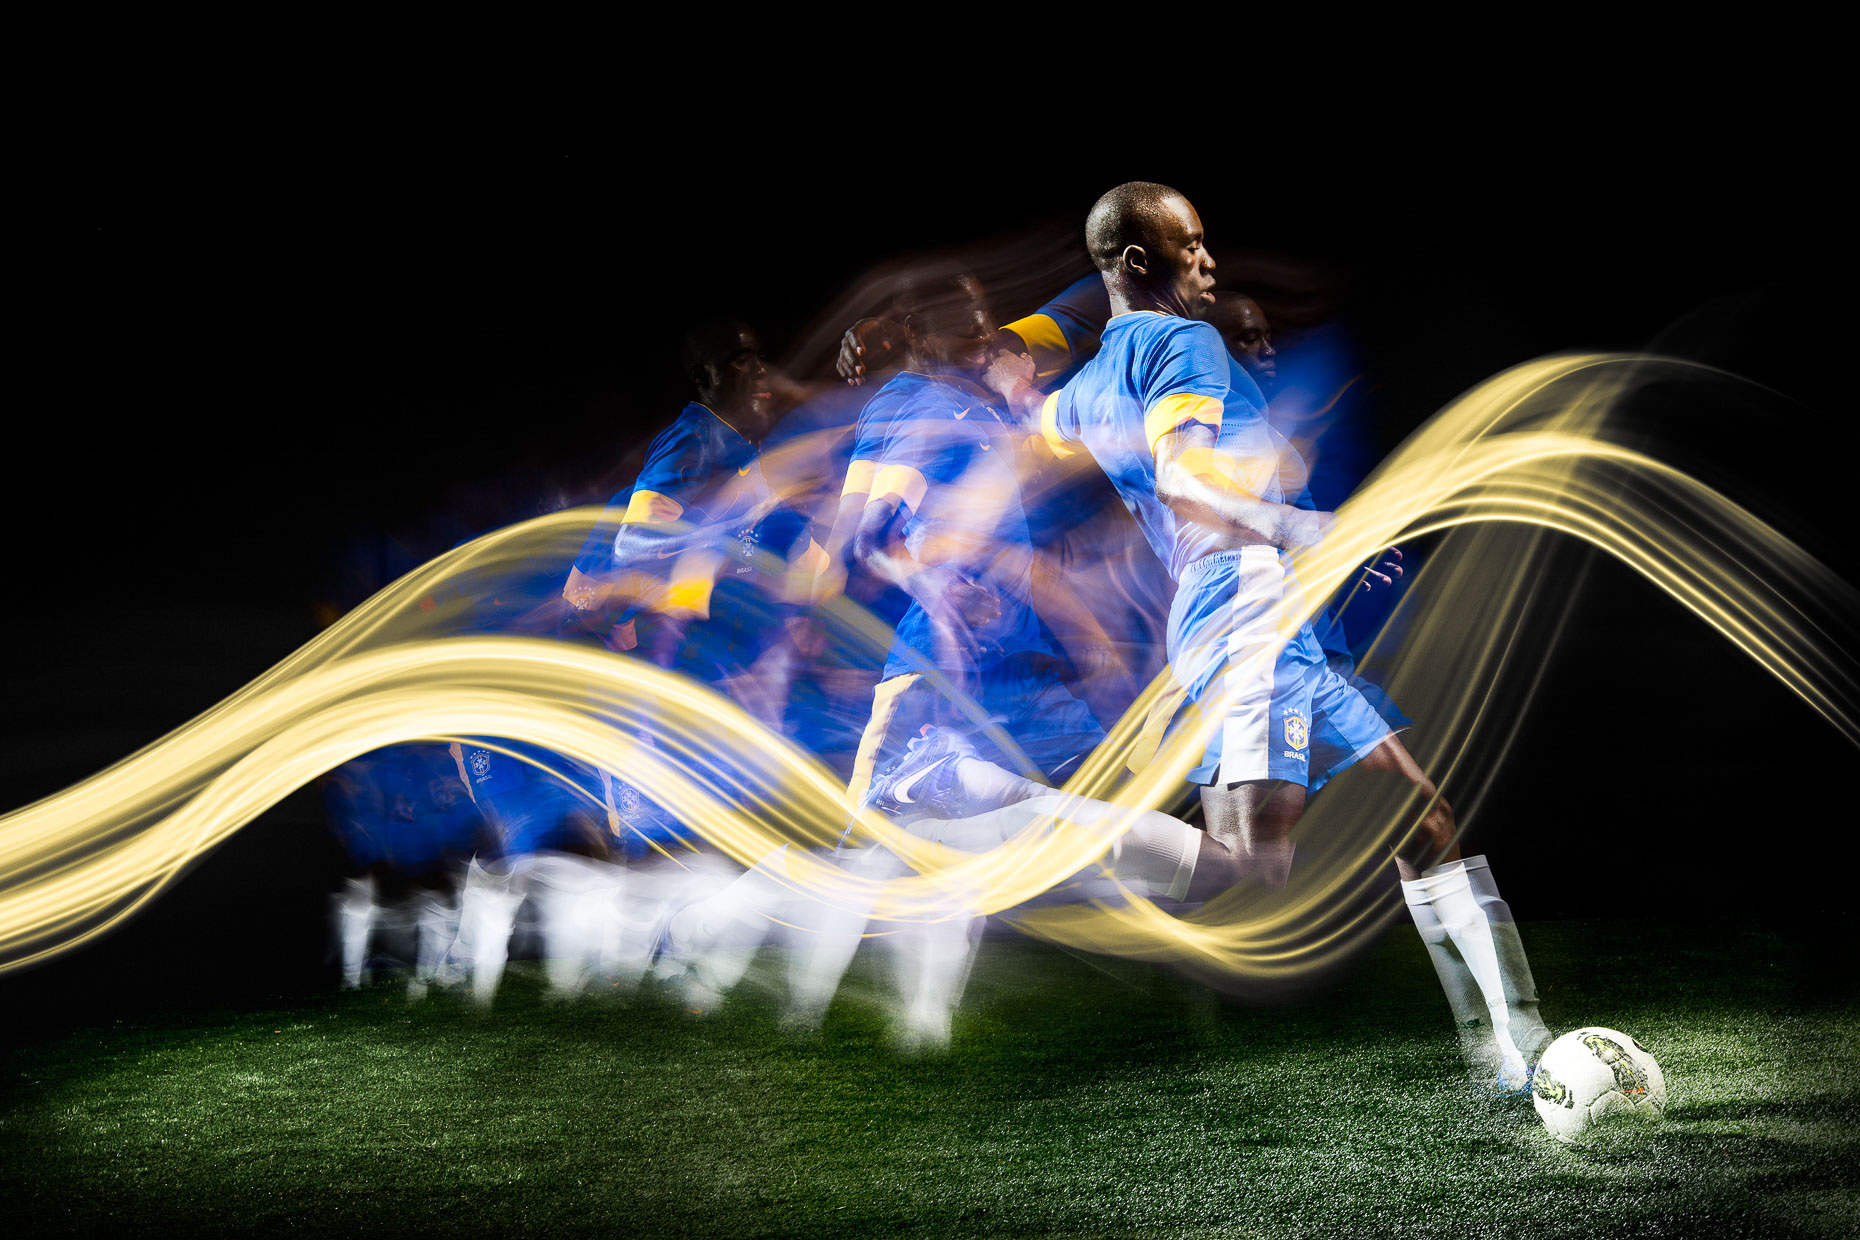 Nike Brazil soccer futbol athlete kicks ball stroboscopic lighting test by Andy Batt